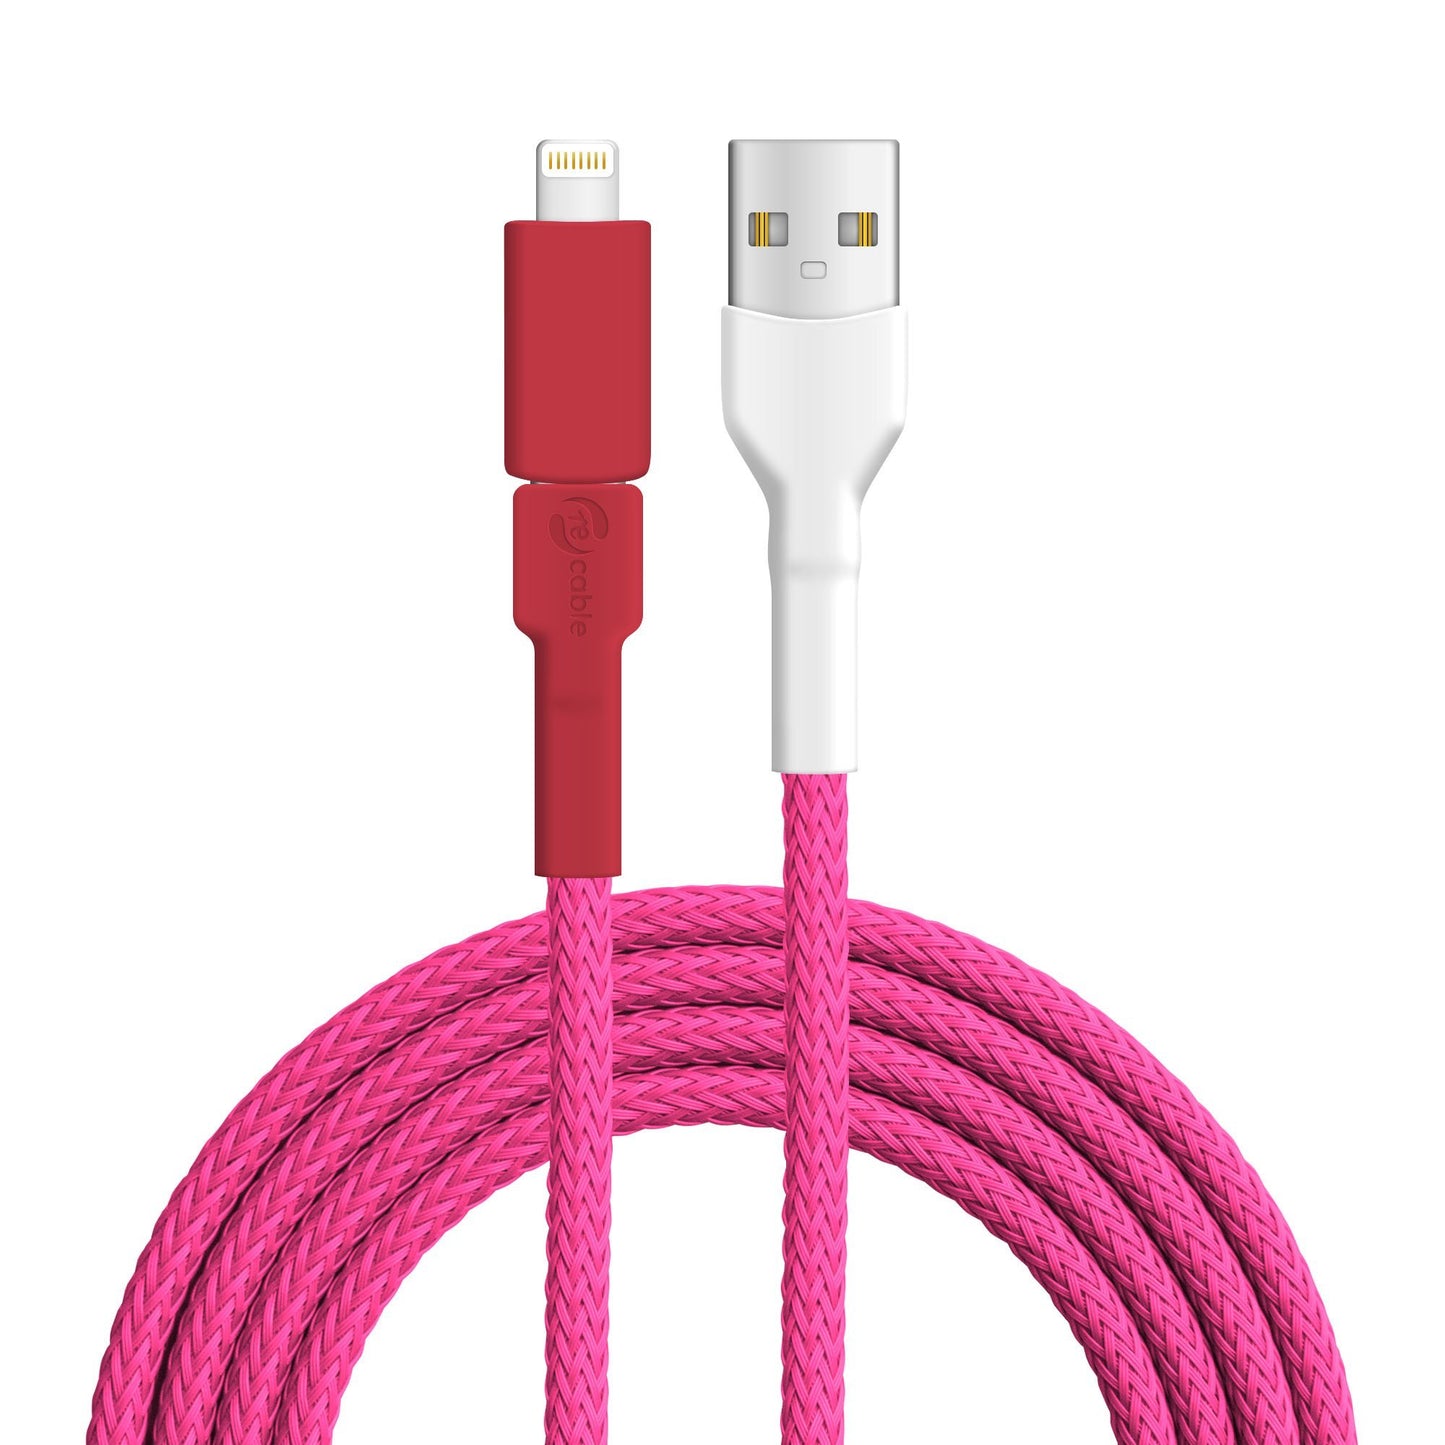 USB-Kabel, Design: Kuba­flamingo, Anschlüsse: USB A auf Micro-USB mit Lightning Adapter (verbunden)